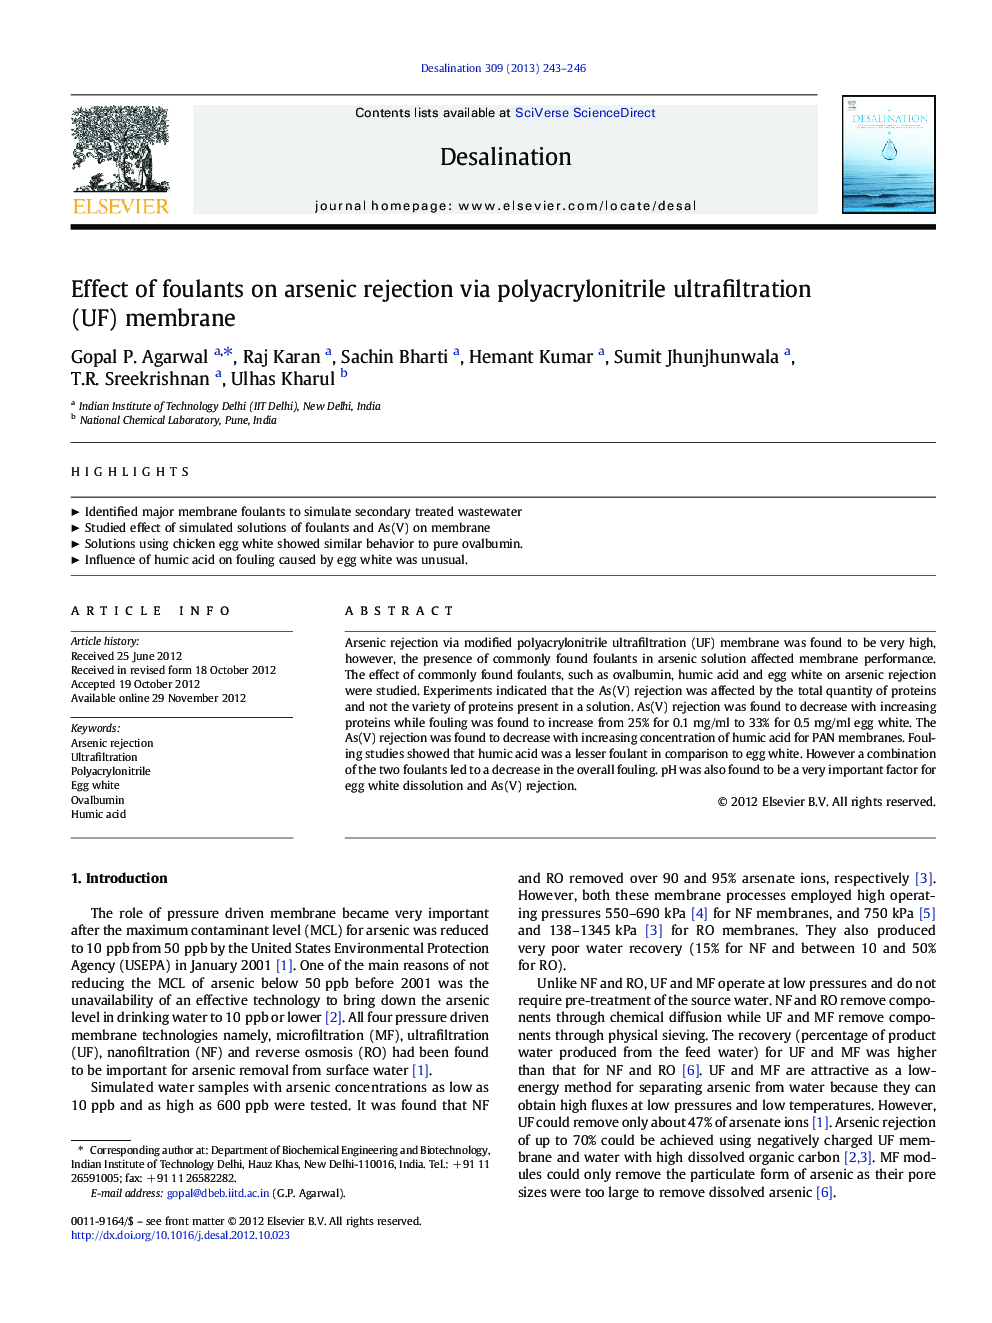 Effect of foulants on arsenic rejection via polyacrylonitrile ultrafiltration (UF) membrane